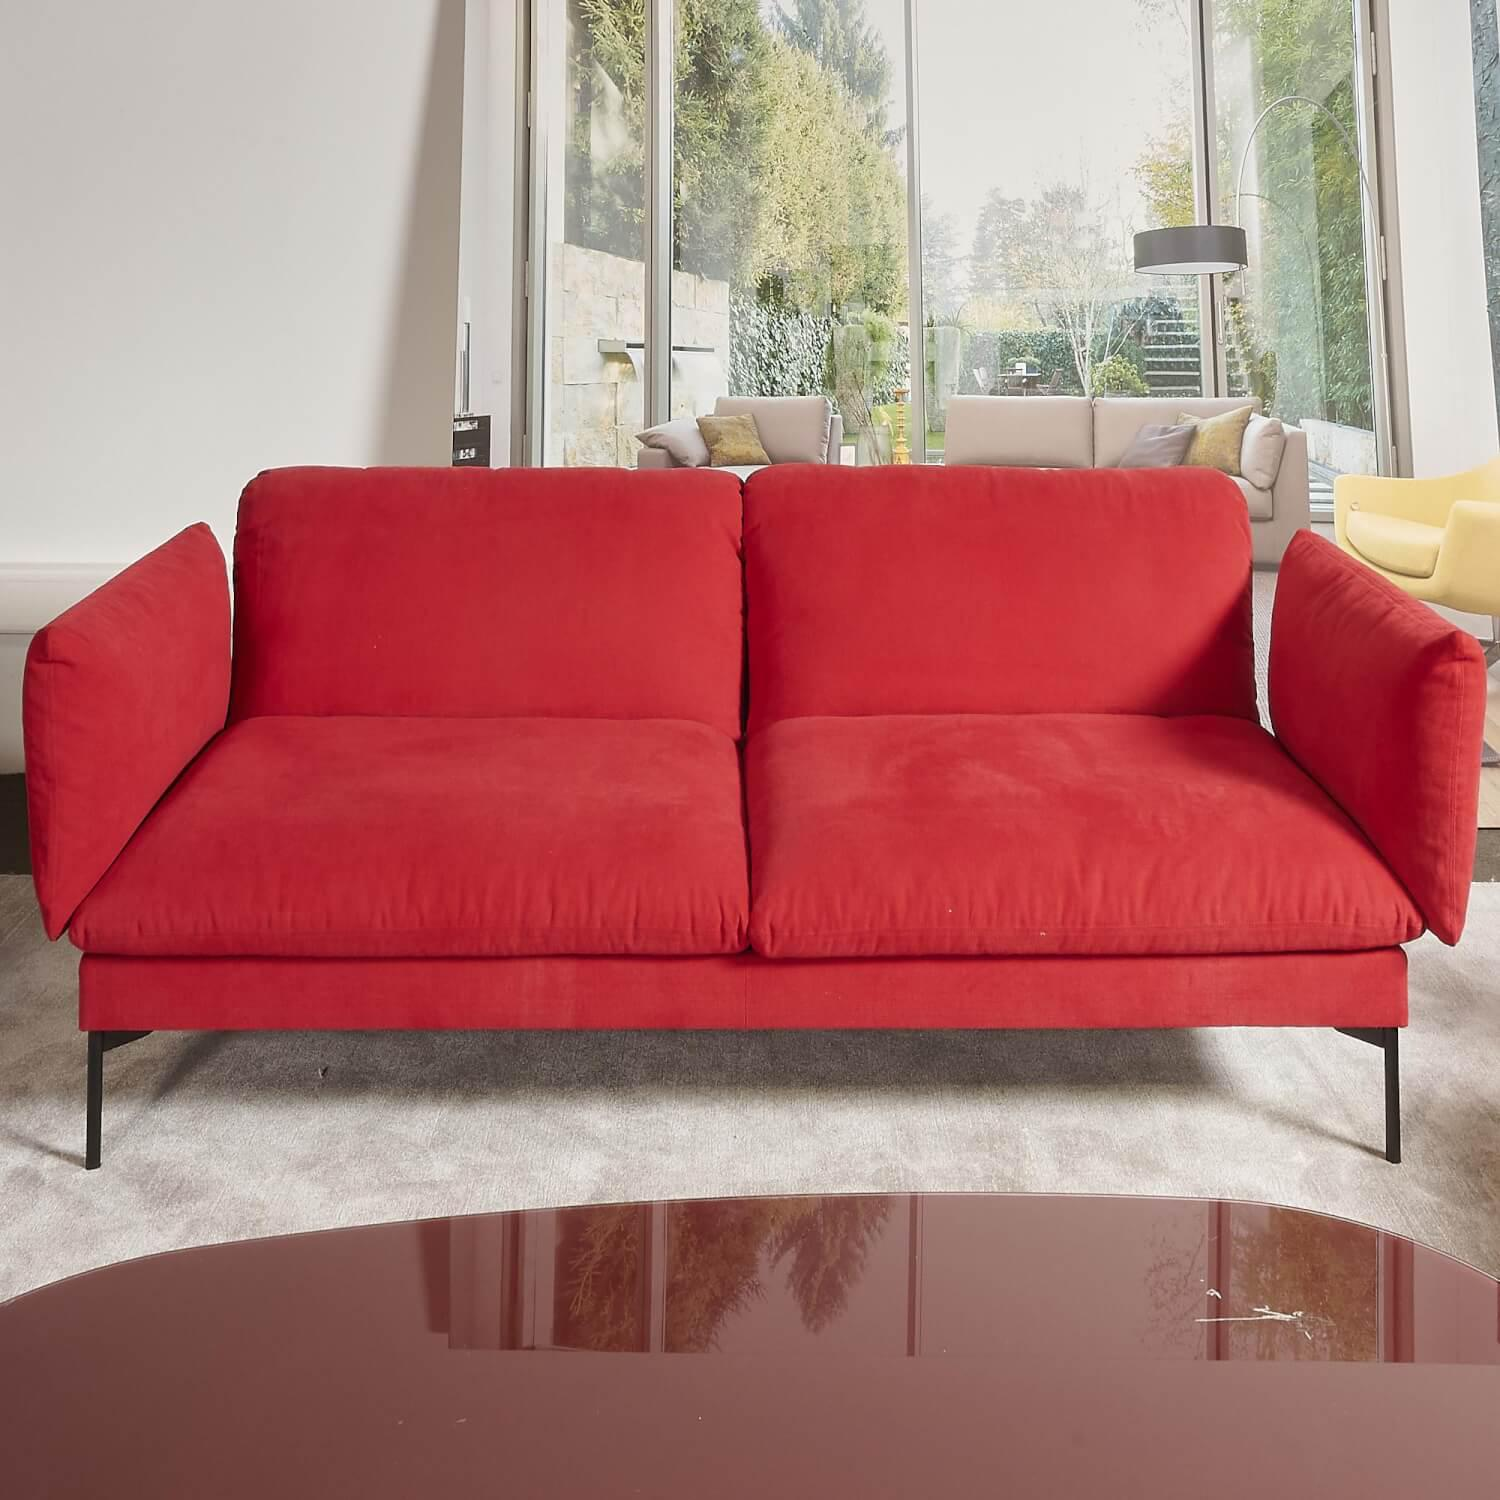 Sofa Heaven Bezug Stoff Hot Madison Reboot CH1249 706 Rot Füße Matt Lackiert Schwarz Mit Zwei Abklappbaren Armlehnen